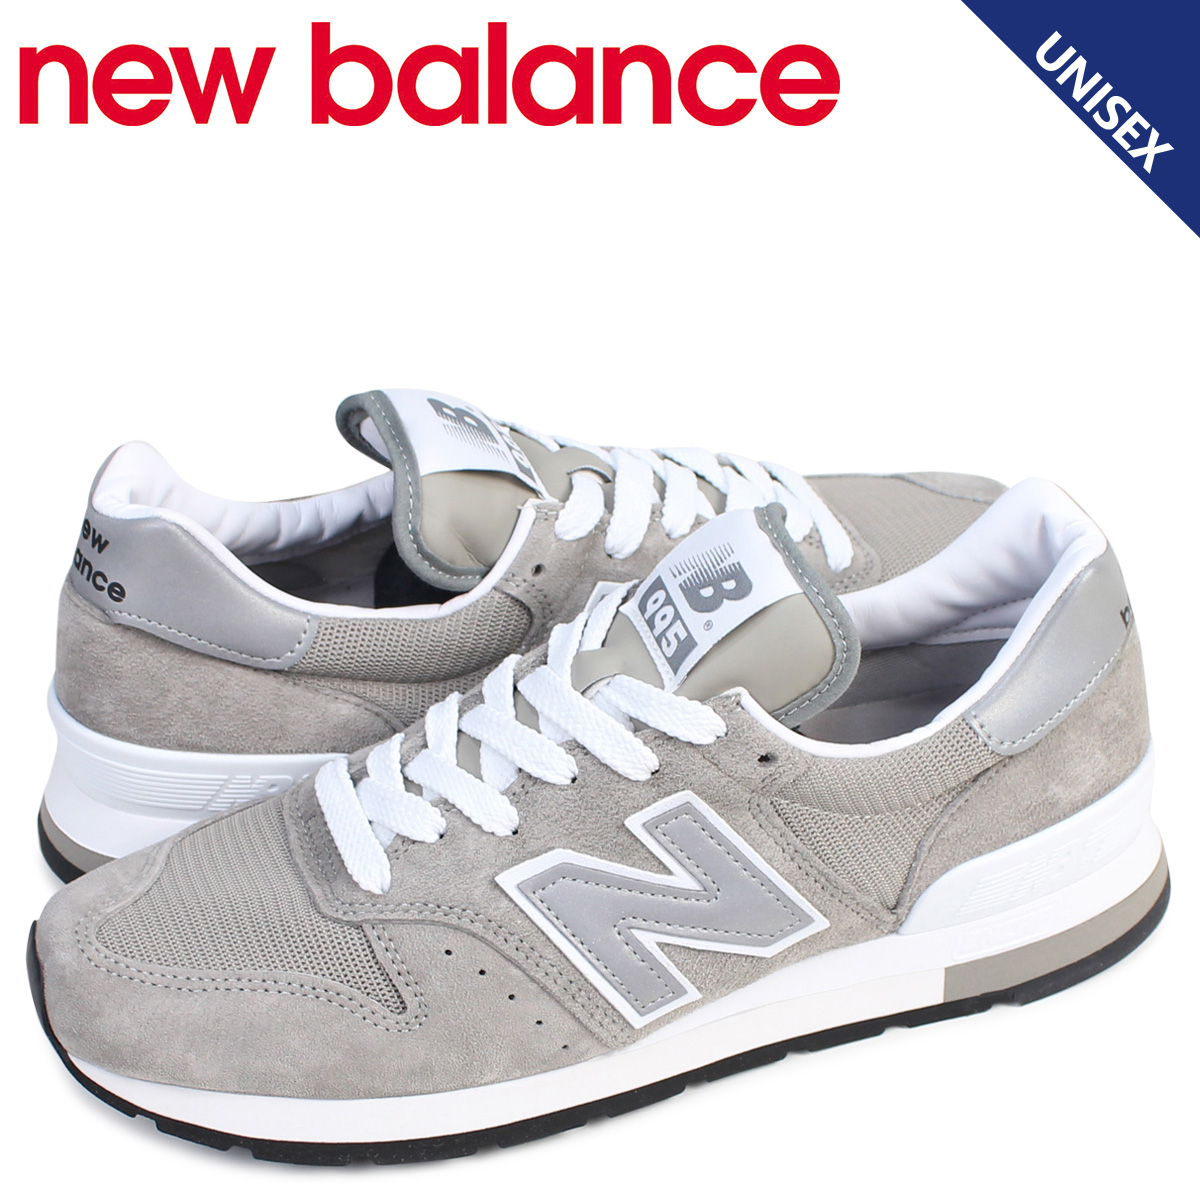 new balance 995 shop